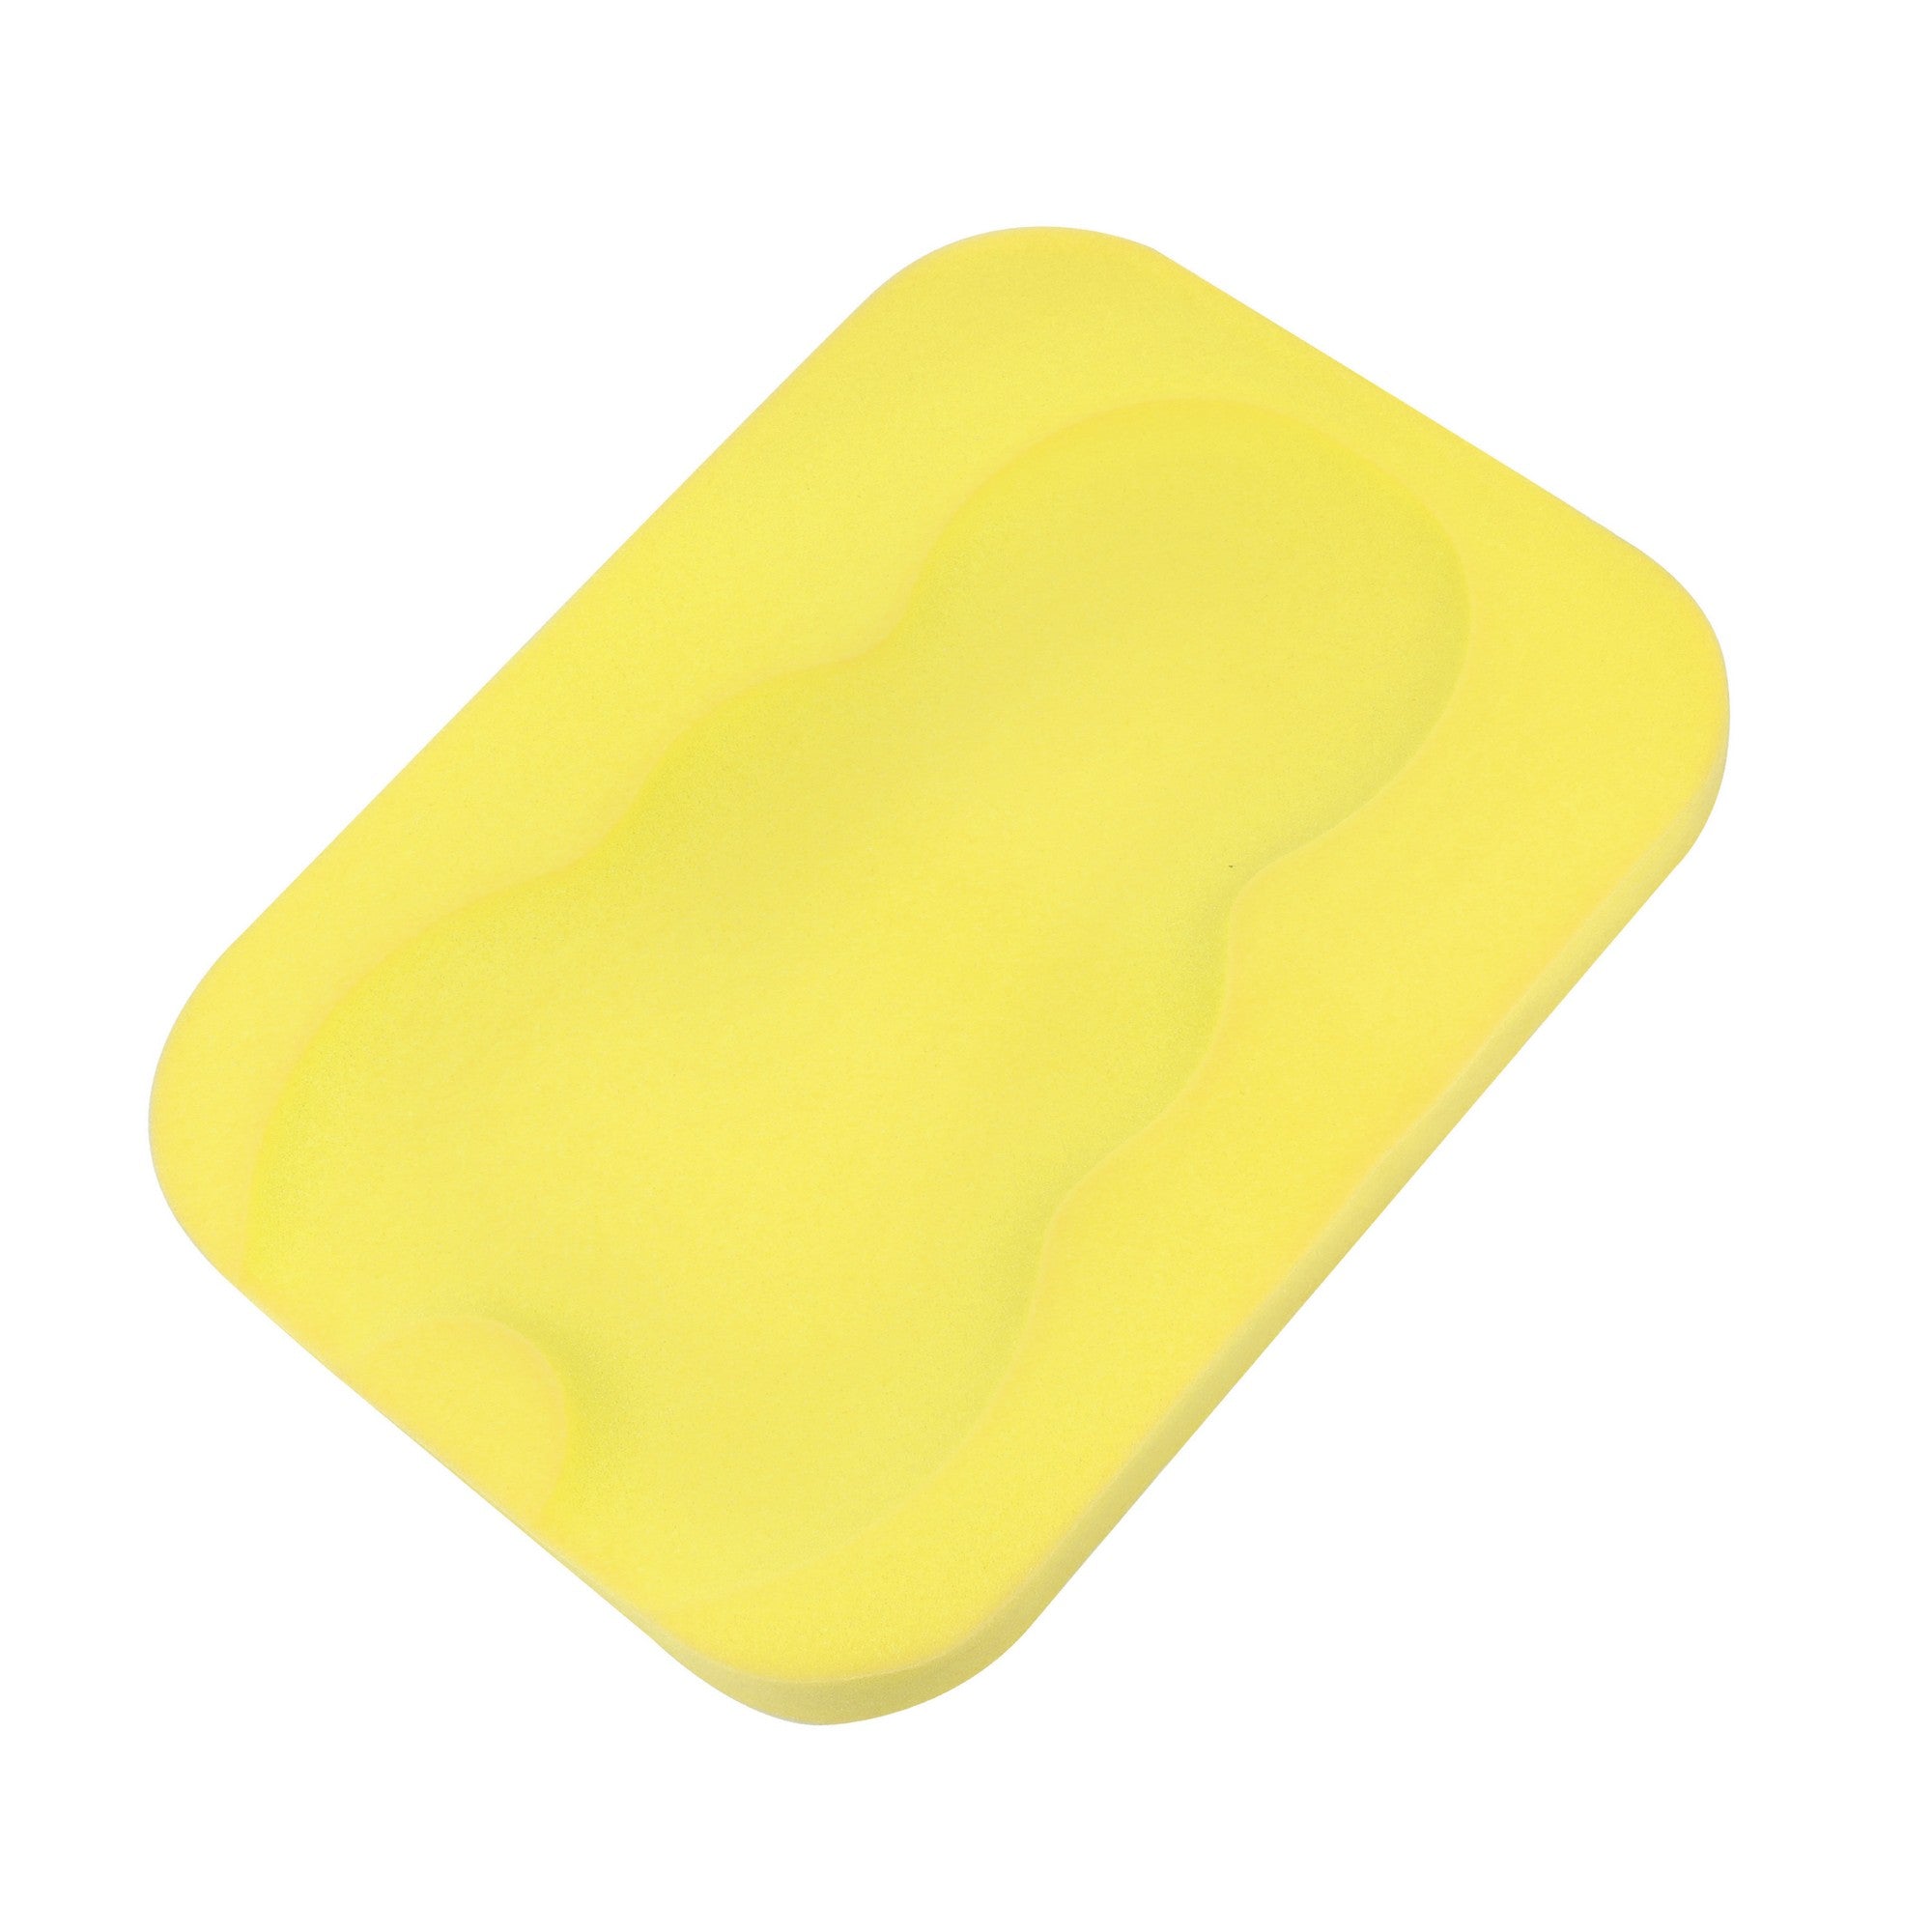 Moon Sponge Bath Accessory Yellow Birth to 5 kg